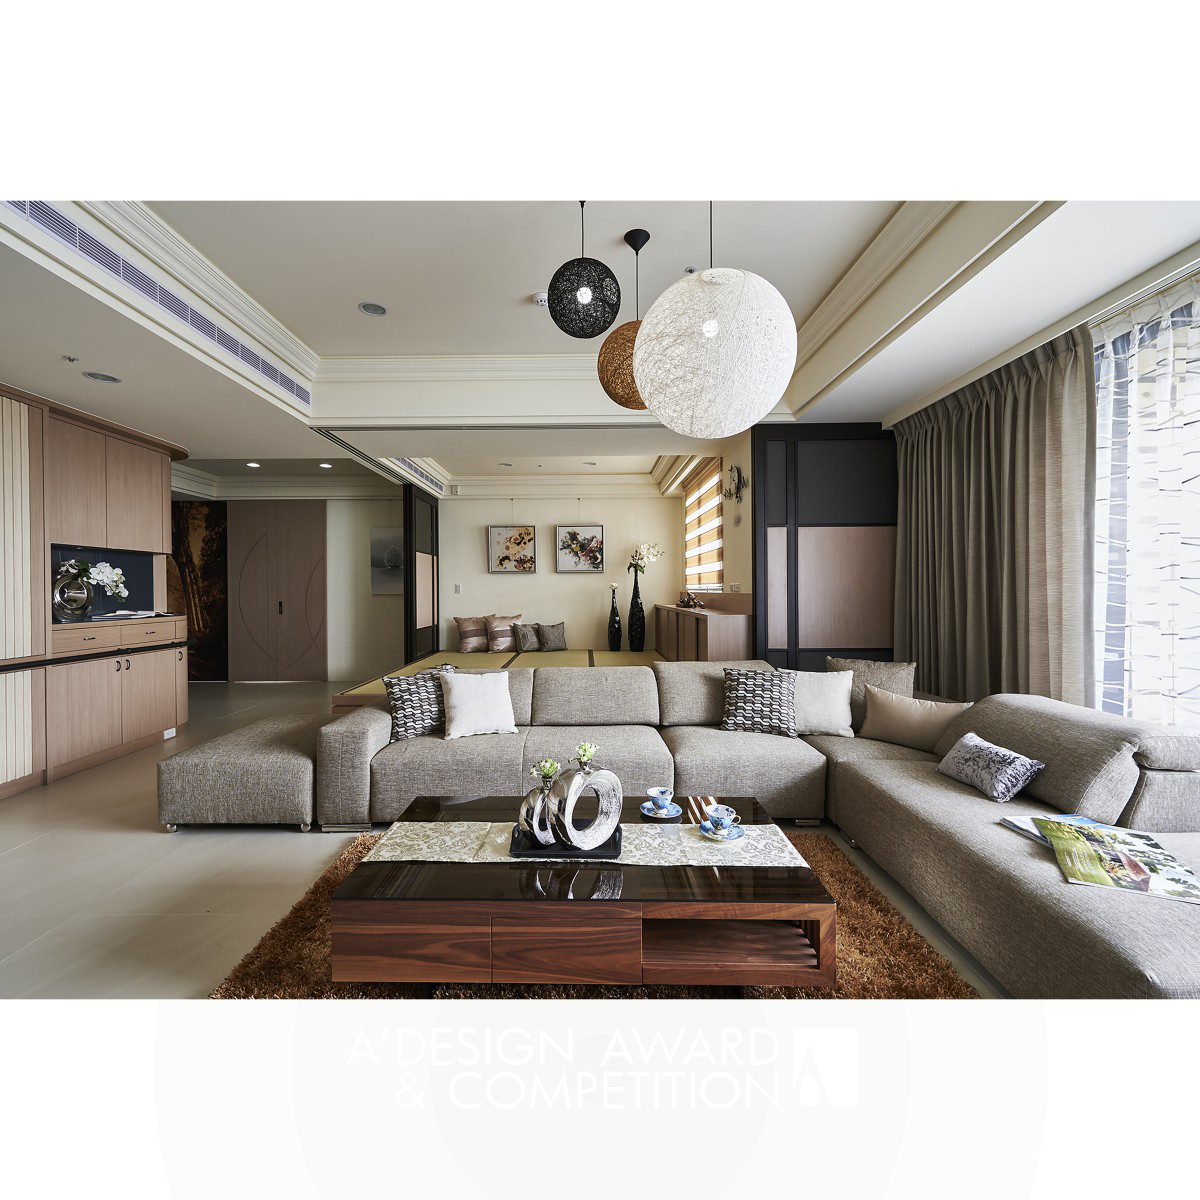 The Sweet Home Interior Design by Hsiu-Hsiu Yu